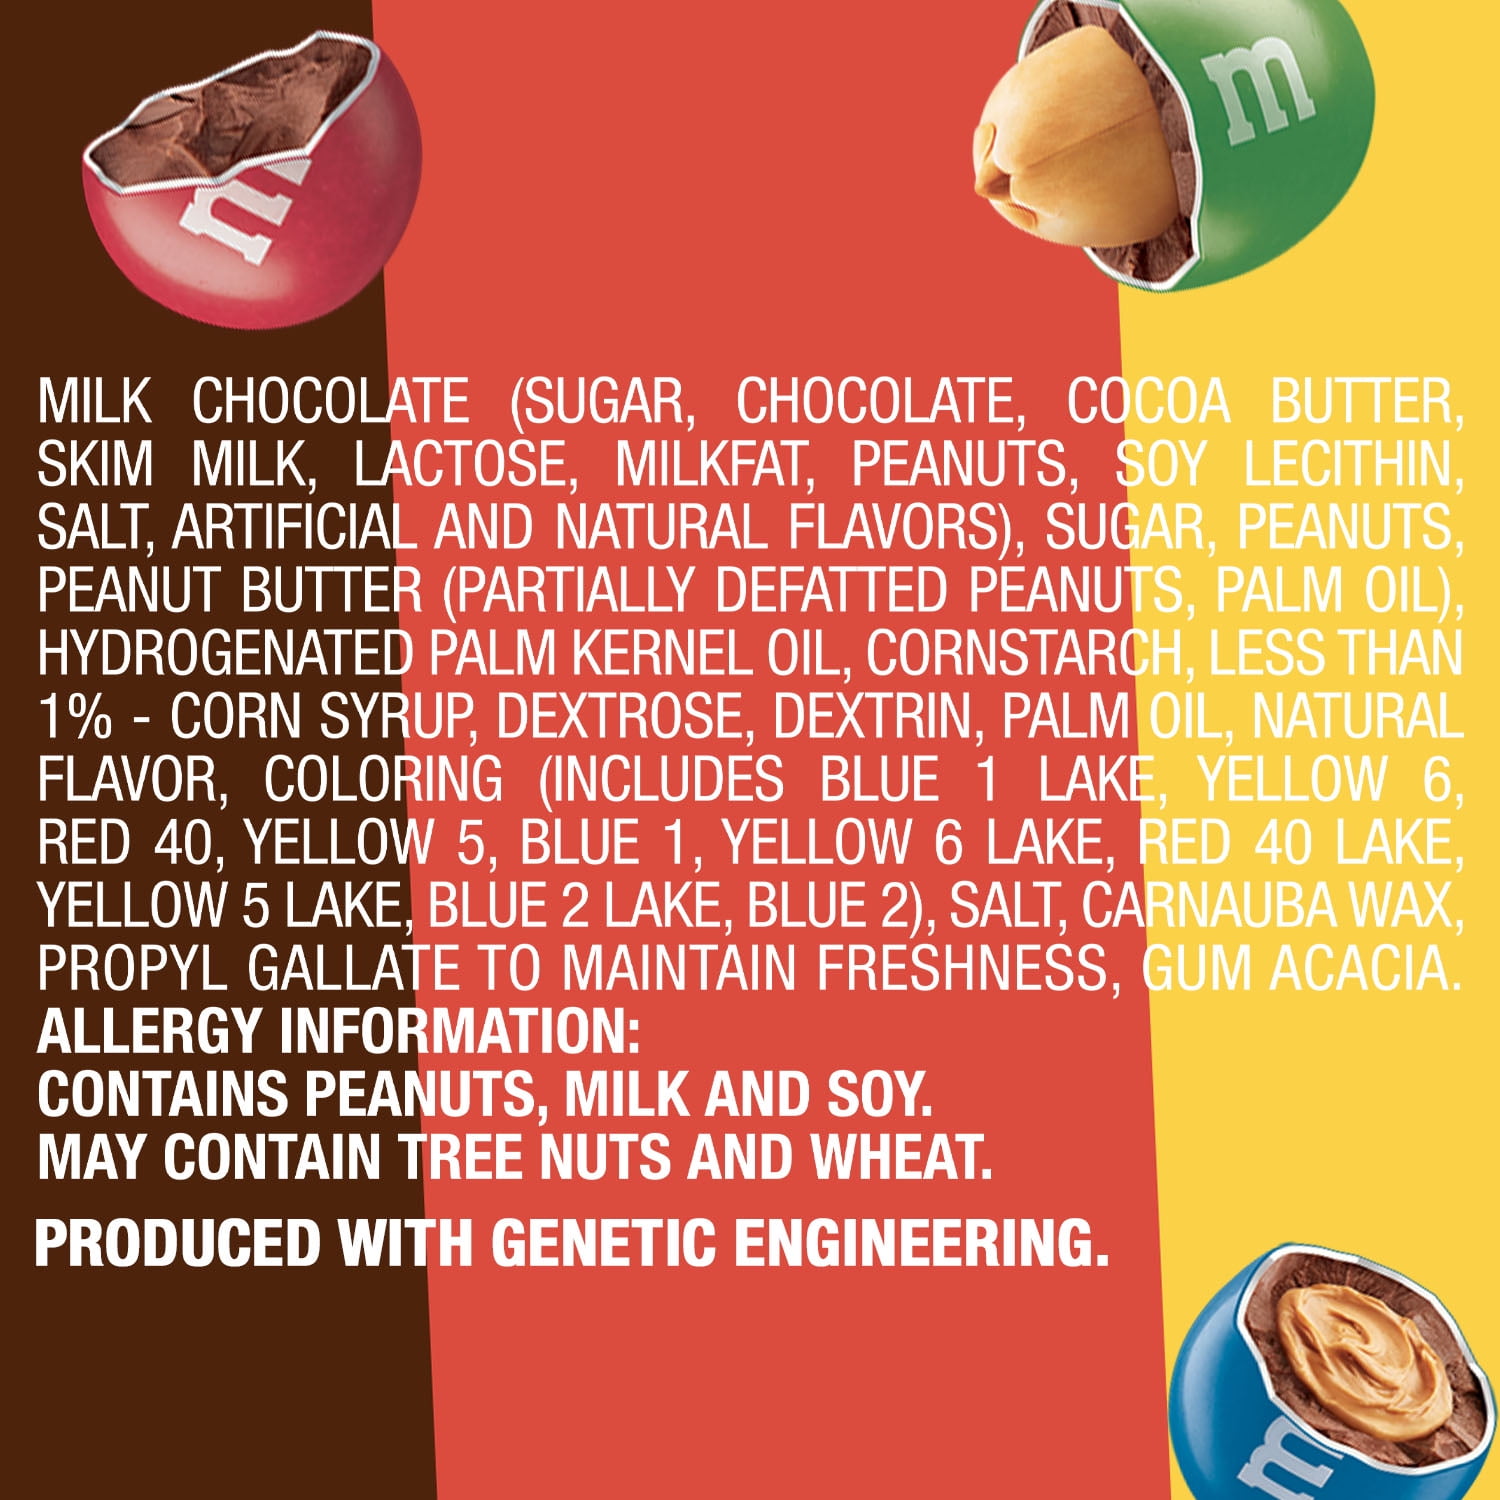 M&M's Mix Up's (Milk Chocolate, Peanut, Crispy) Large Bag – 335g – Shopifull